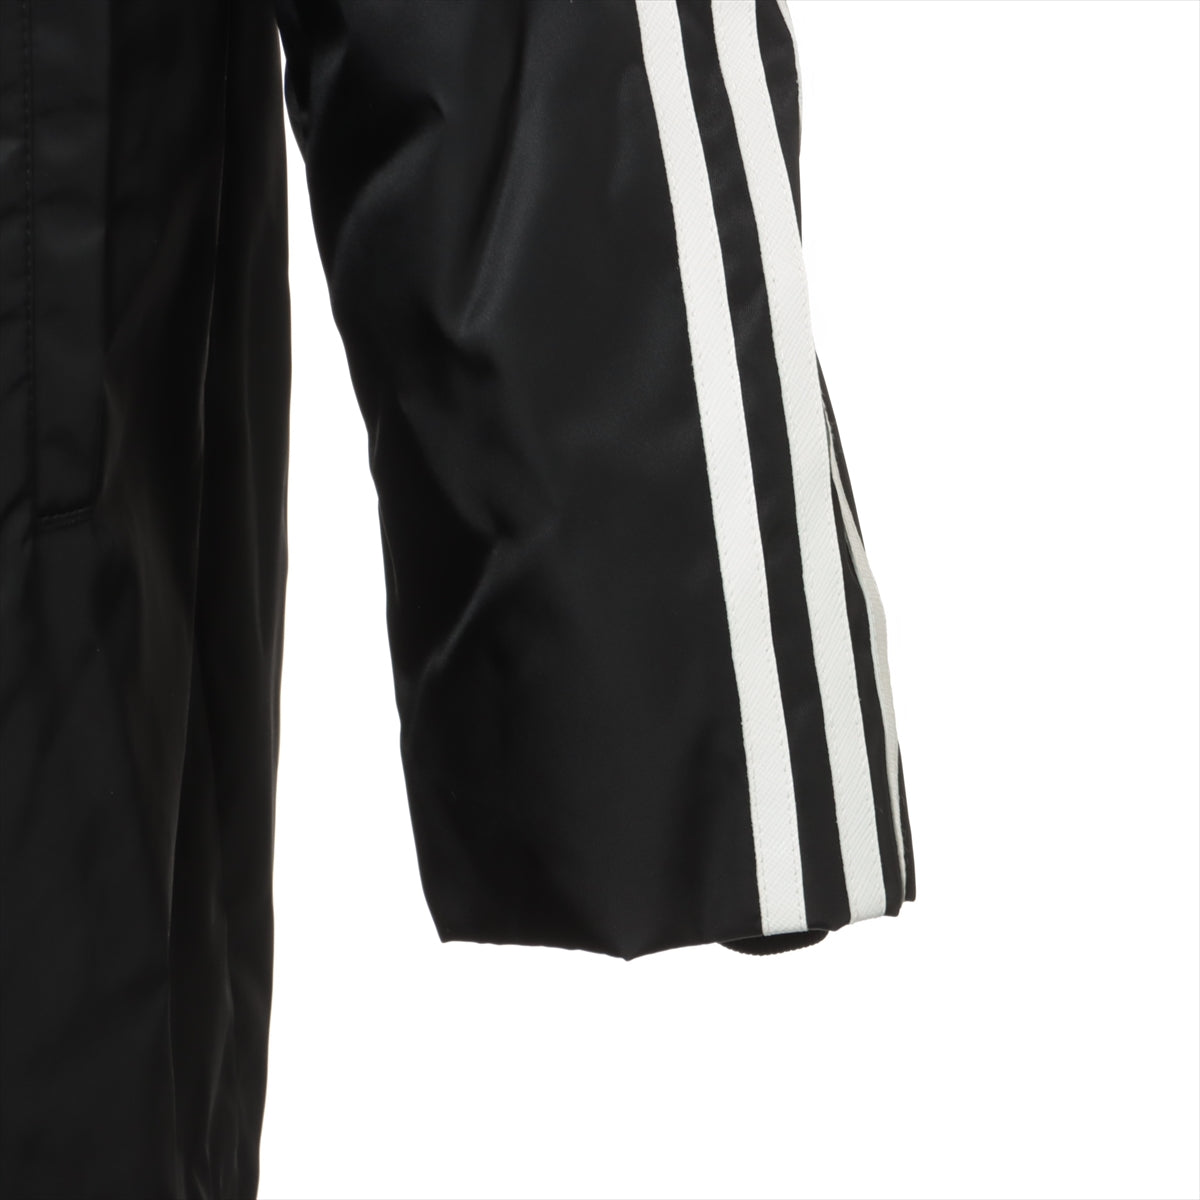 Prada x Adidas Re Nylon Re Nylon 21AW Nylon Padded coat 48 Men's Black  SGB937